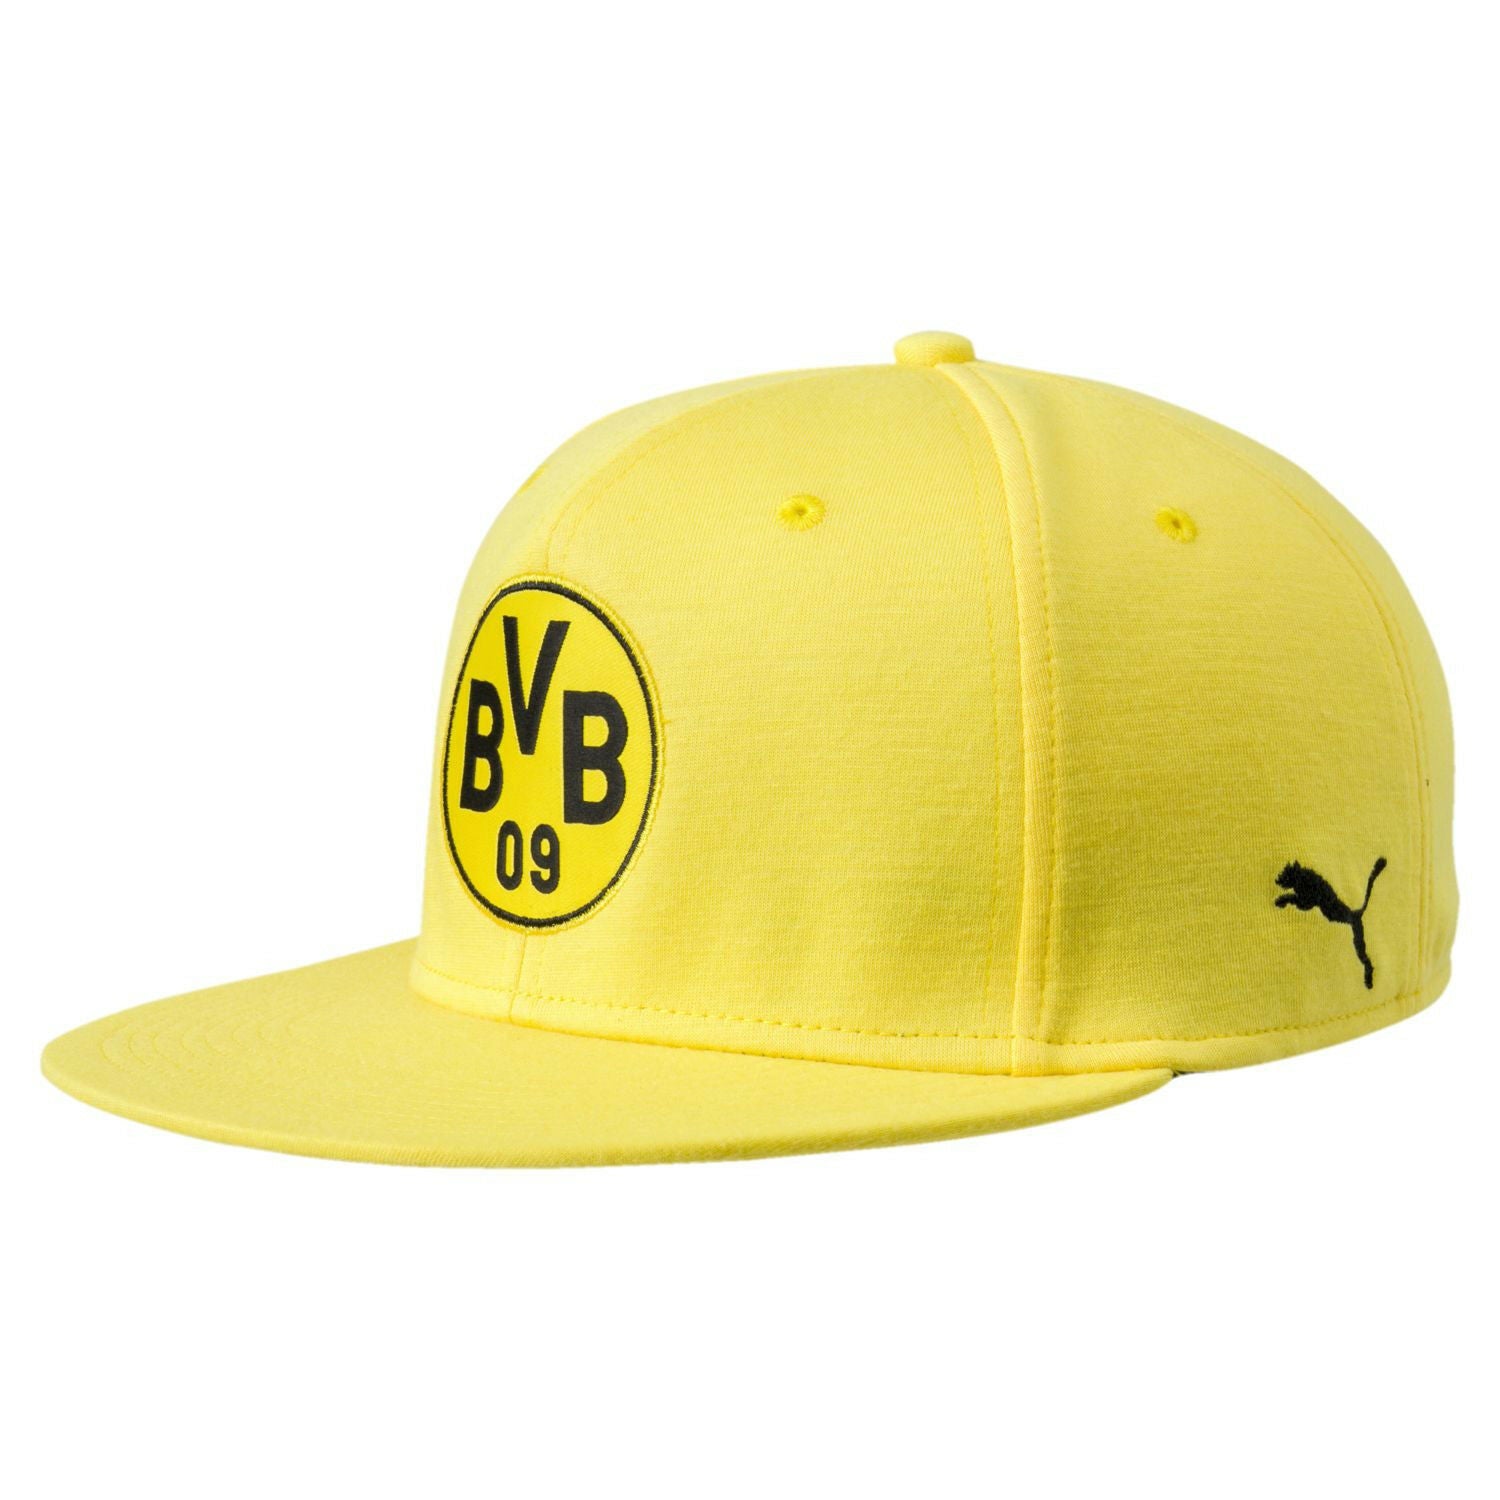 Puma BVB Borussia Dortmund 2017 - 2018 Flat Brim Stretech Fit Yello Cap Size S/M